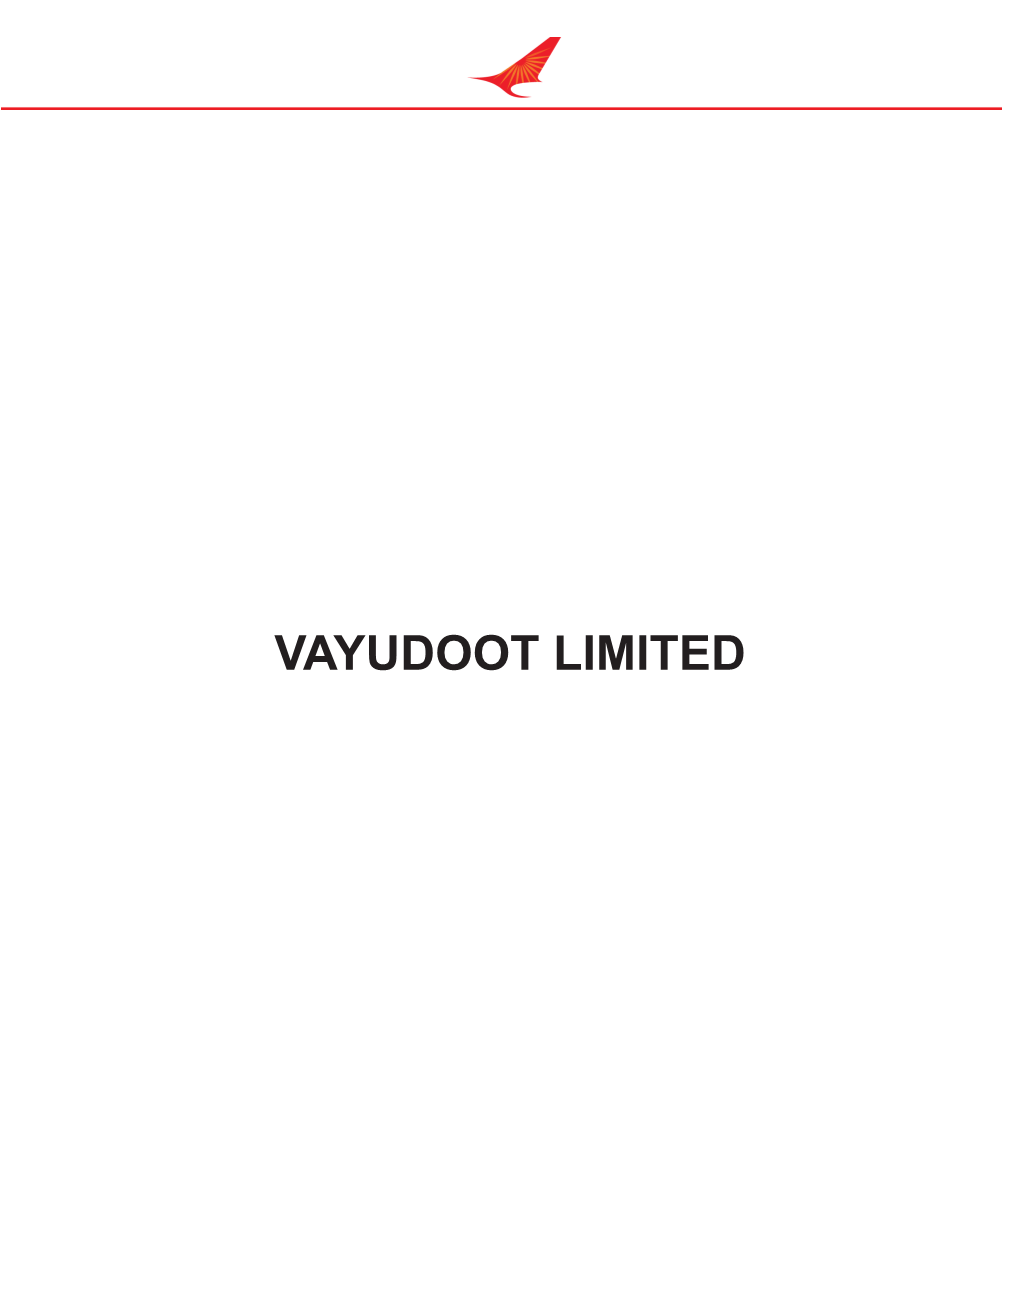 Vayudoot Limited